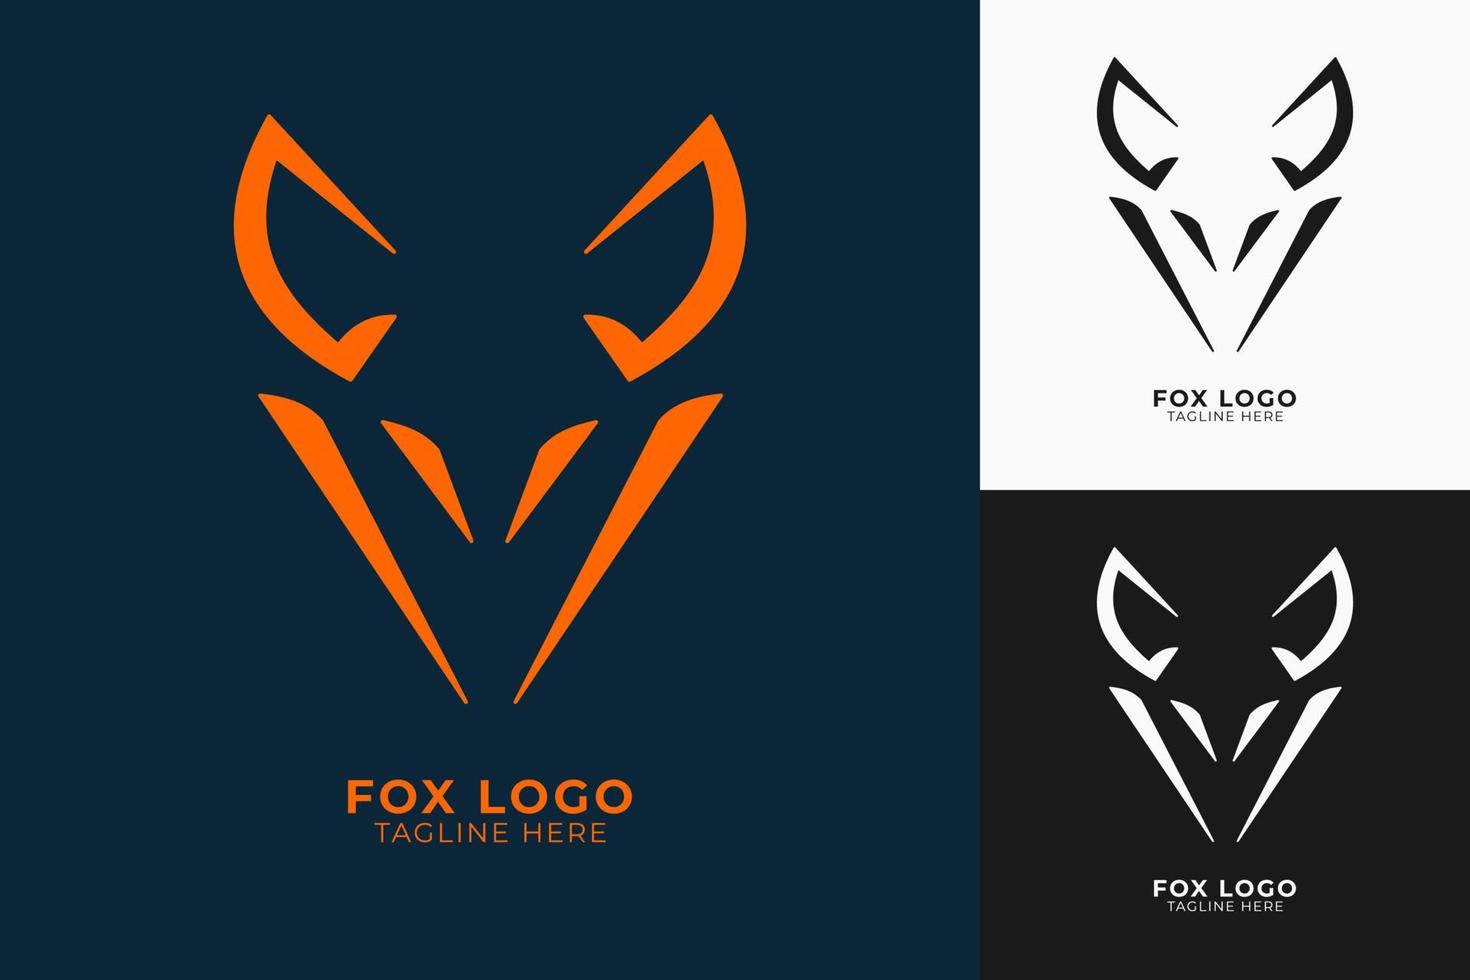 design minimalista do logotipo da raposa. design de logotipo de cabeça de raposa de forma moderna vetor